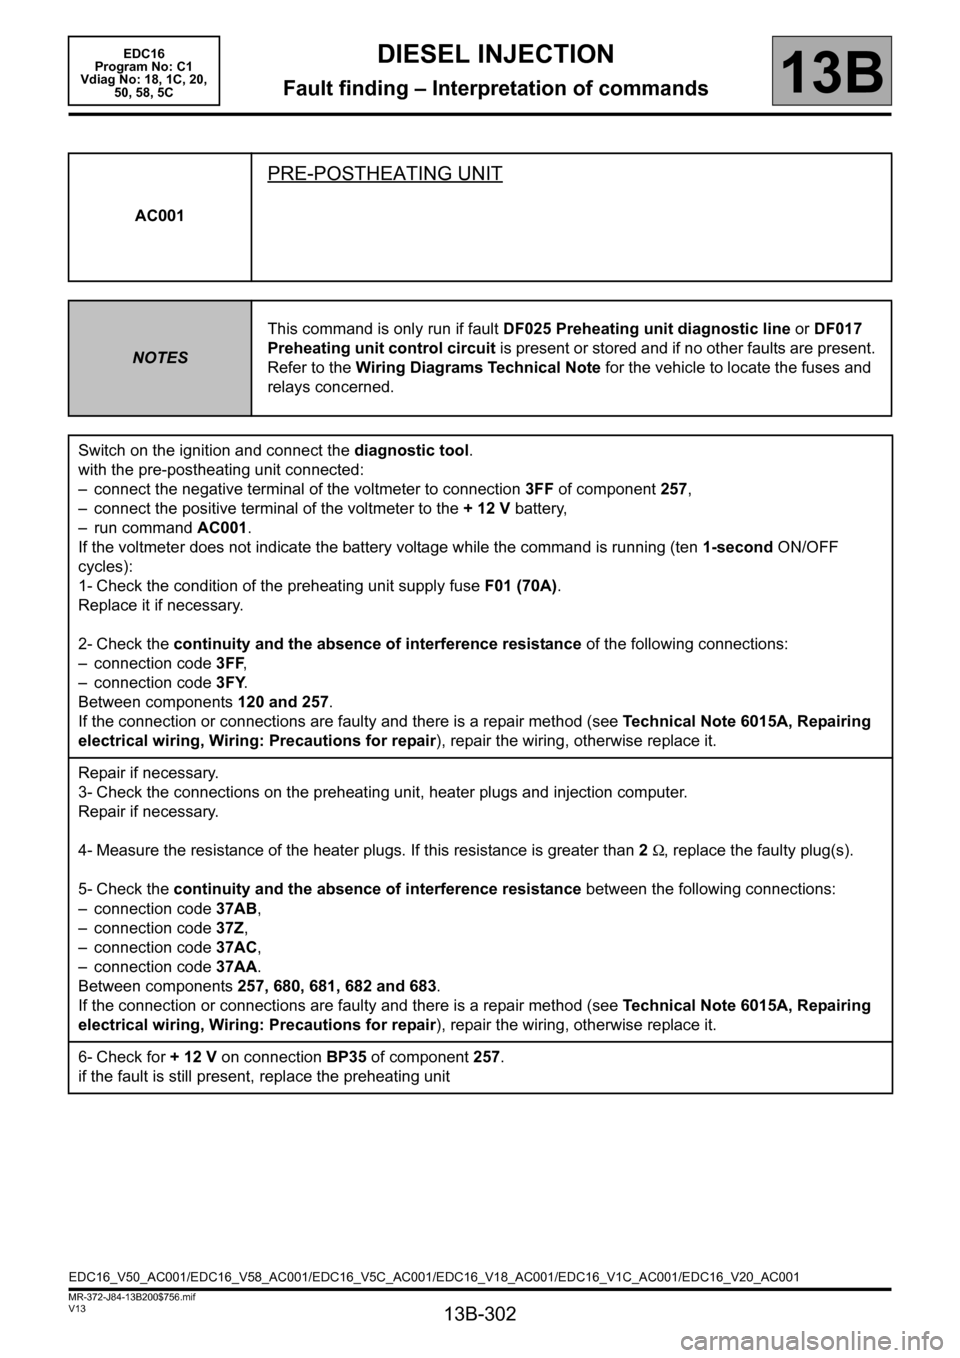 RENAULT SCENIC 2011 J95 / 3.G Engine And Peripherals EDC16 Workshop Manual 13B-302
MR-372-J84-13B200$756.mif
V13
DIESEL INJECTION
Fault finding – Interpretation of commands
EDC16  
Program No: C1 
Vdiag No: 18, 1C, 20, 
50, 58, 5C
13B
AC001
PRE-POSTHEATING UNIT
NOTESThis c